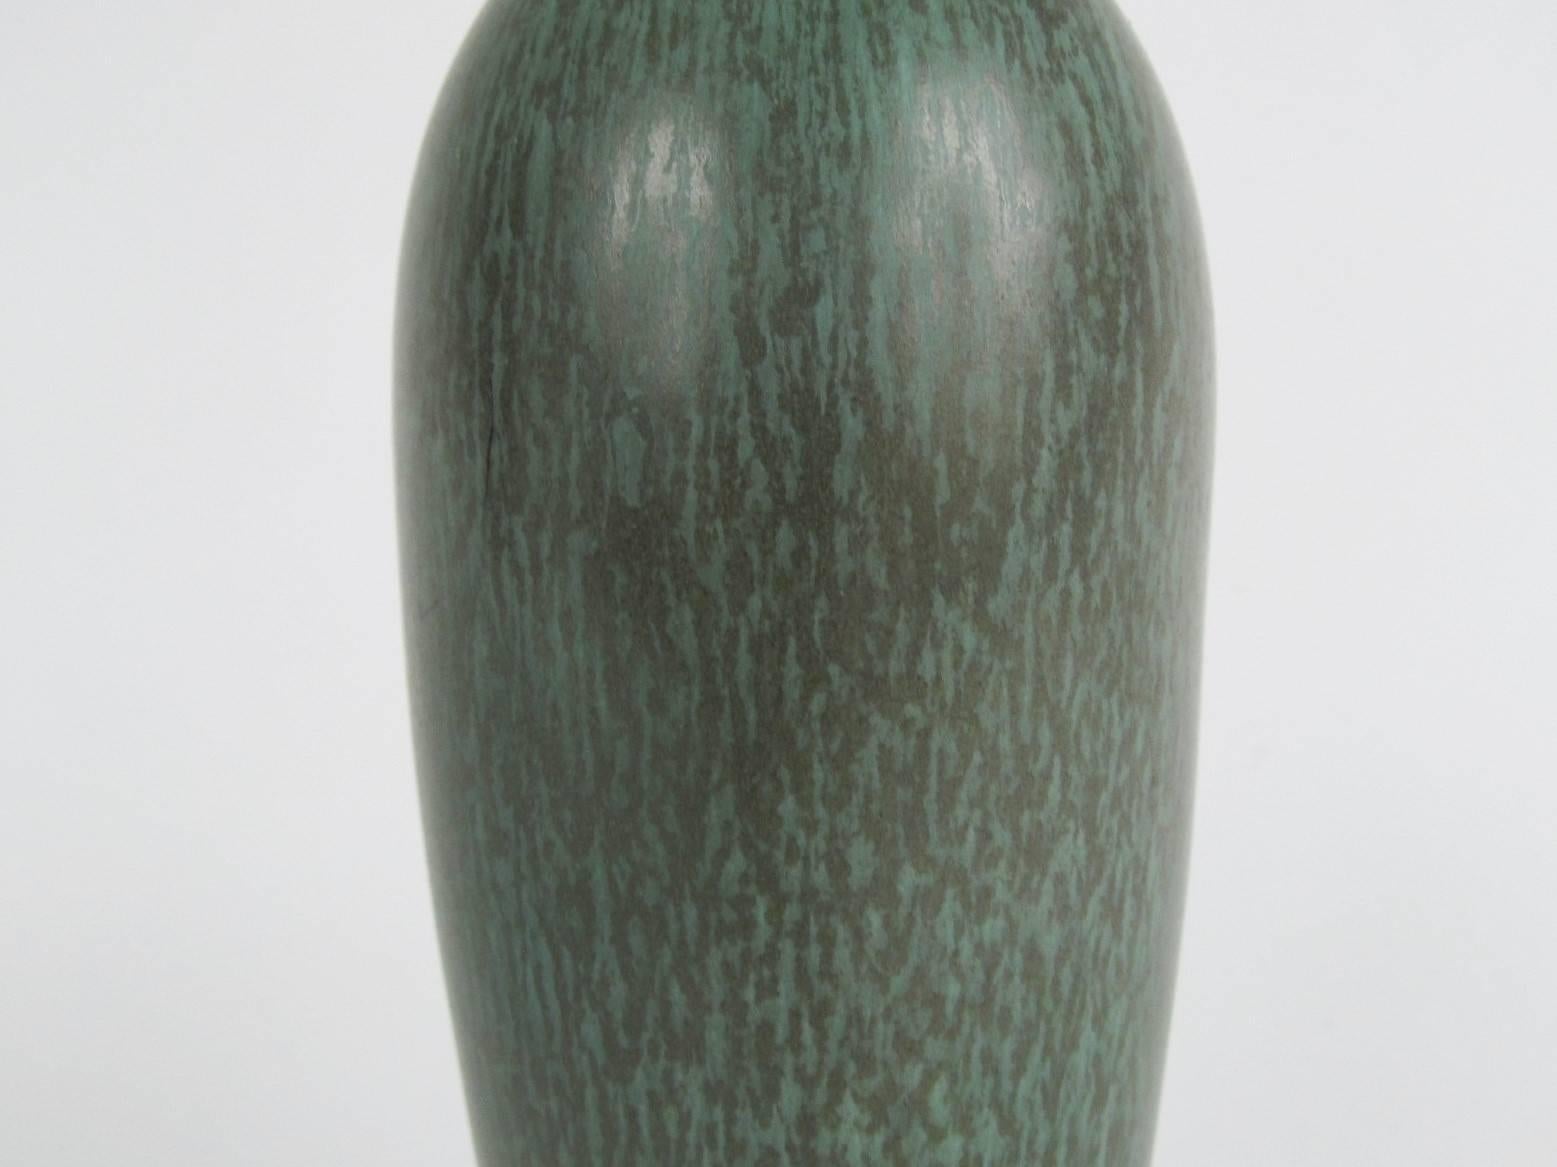 Ceramic Rorstrand Studio Pottery Vase by Gunnar Nylund For Sale